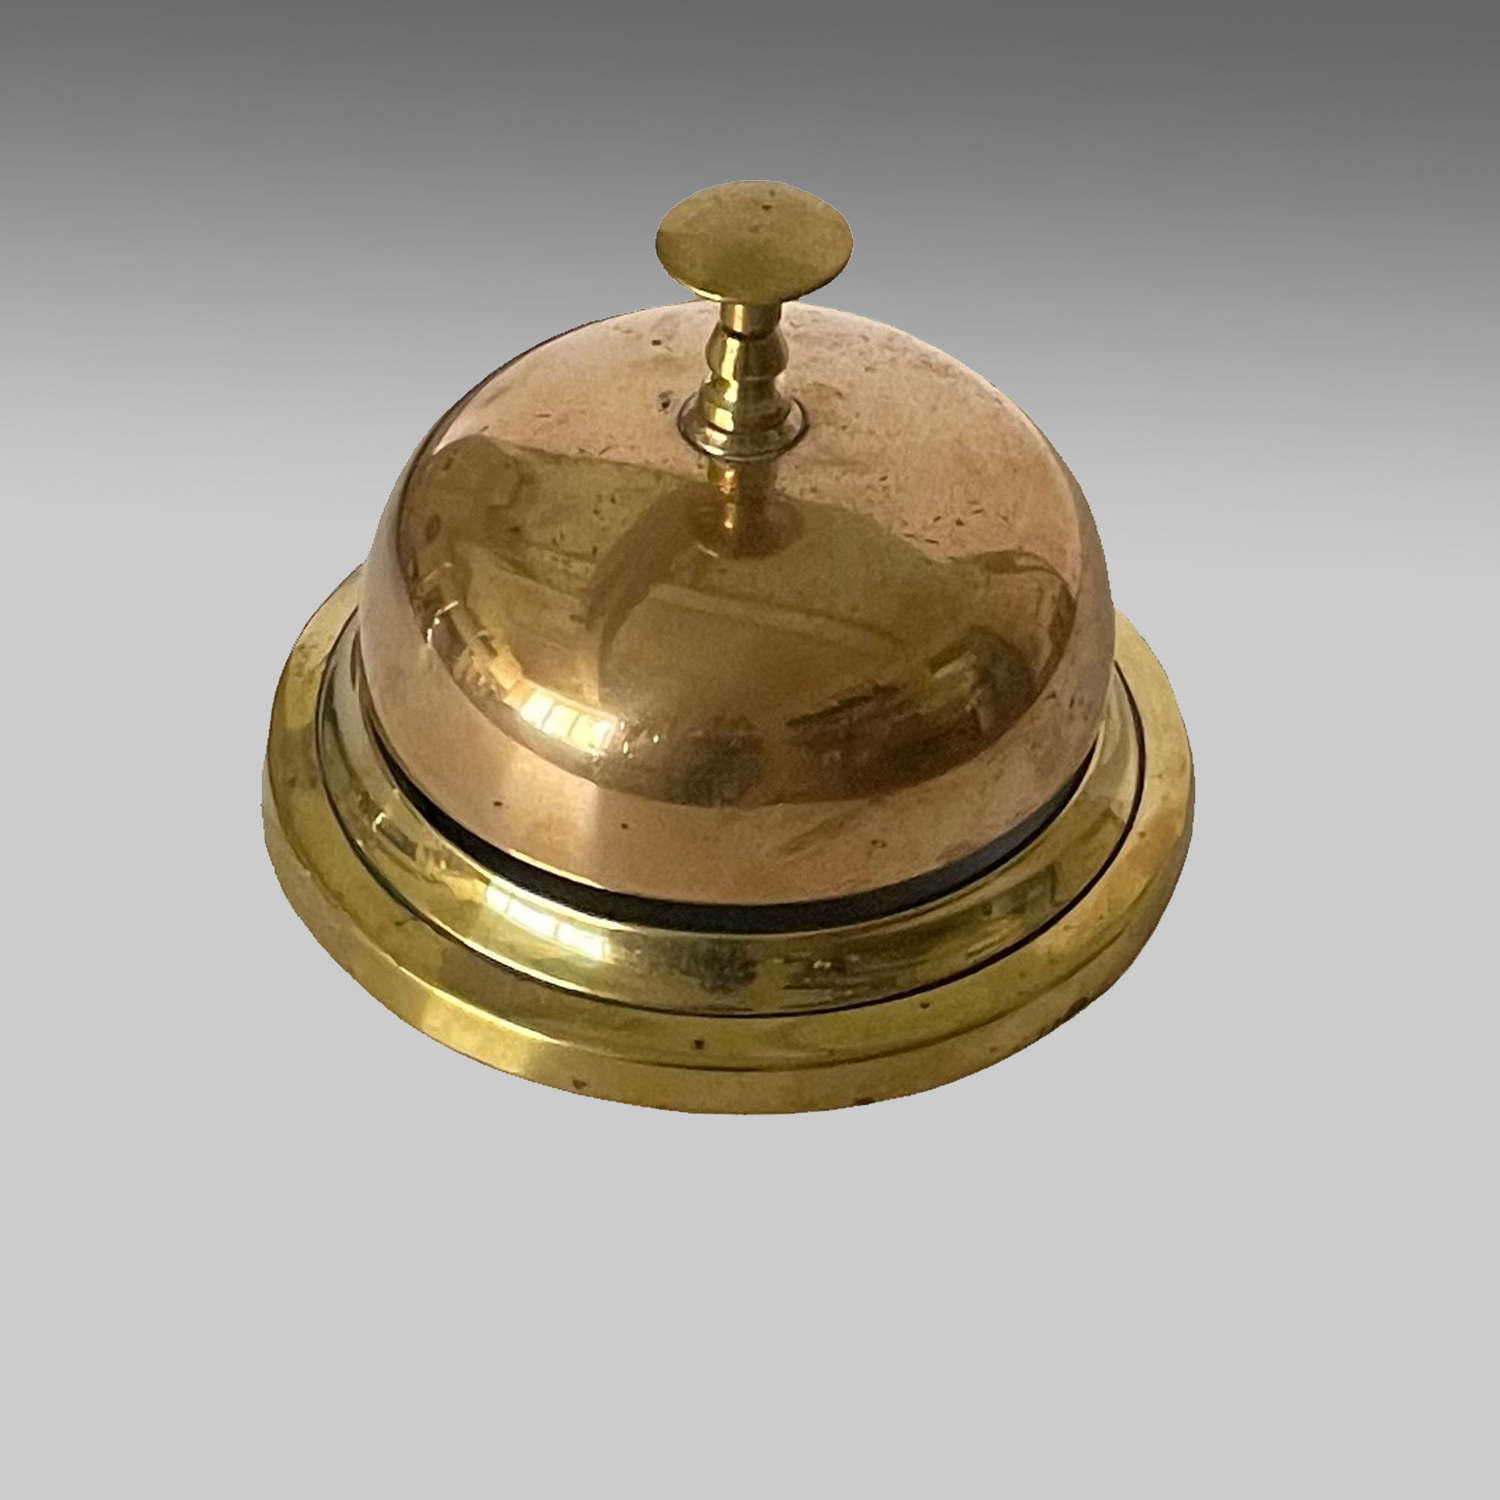 Victorian shop counter bell